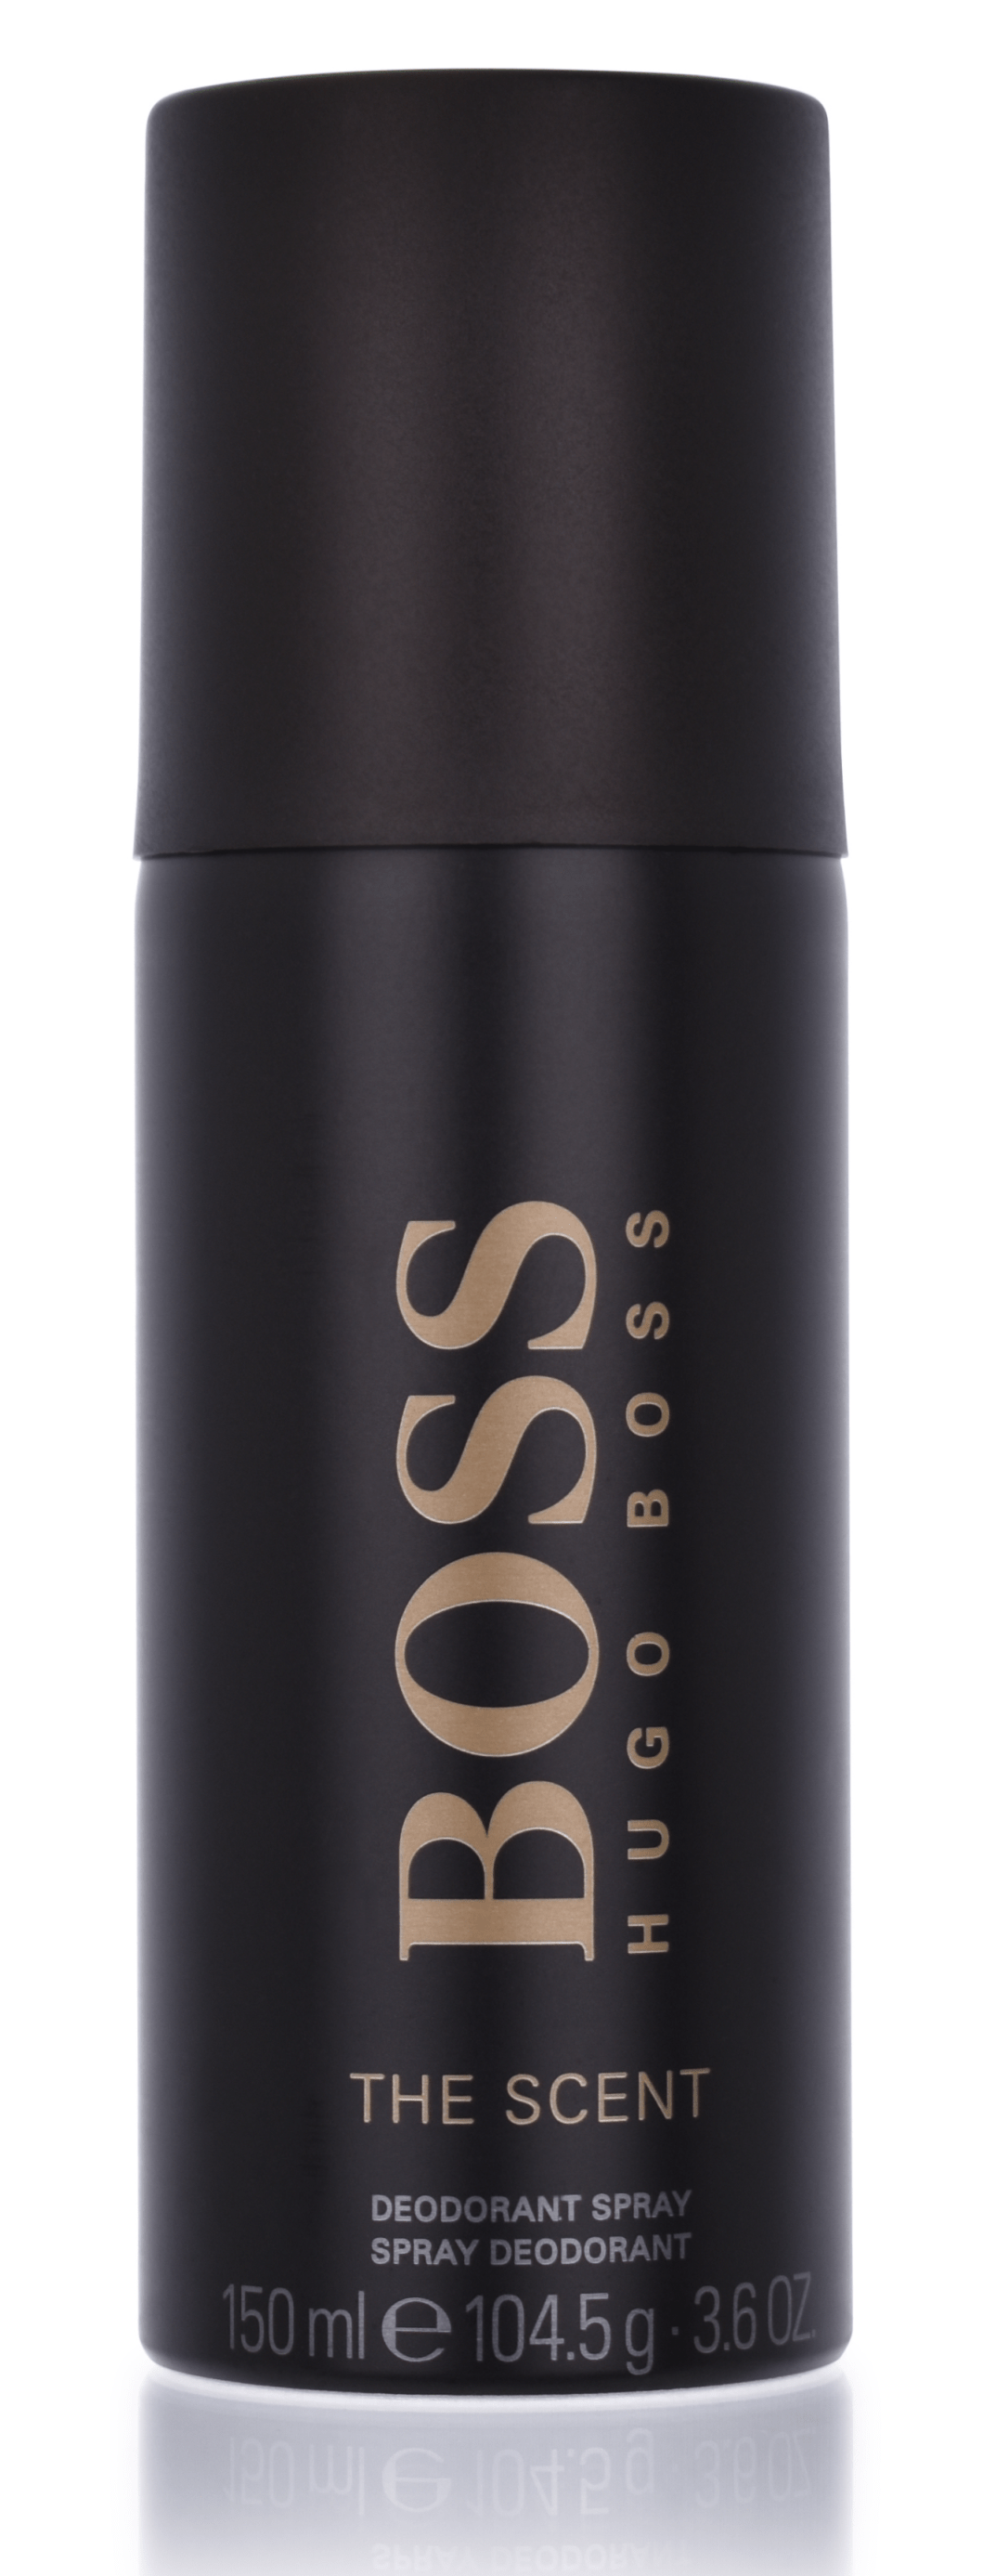 Hugo Boss The Scent 150 ml Deodorant Spray